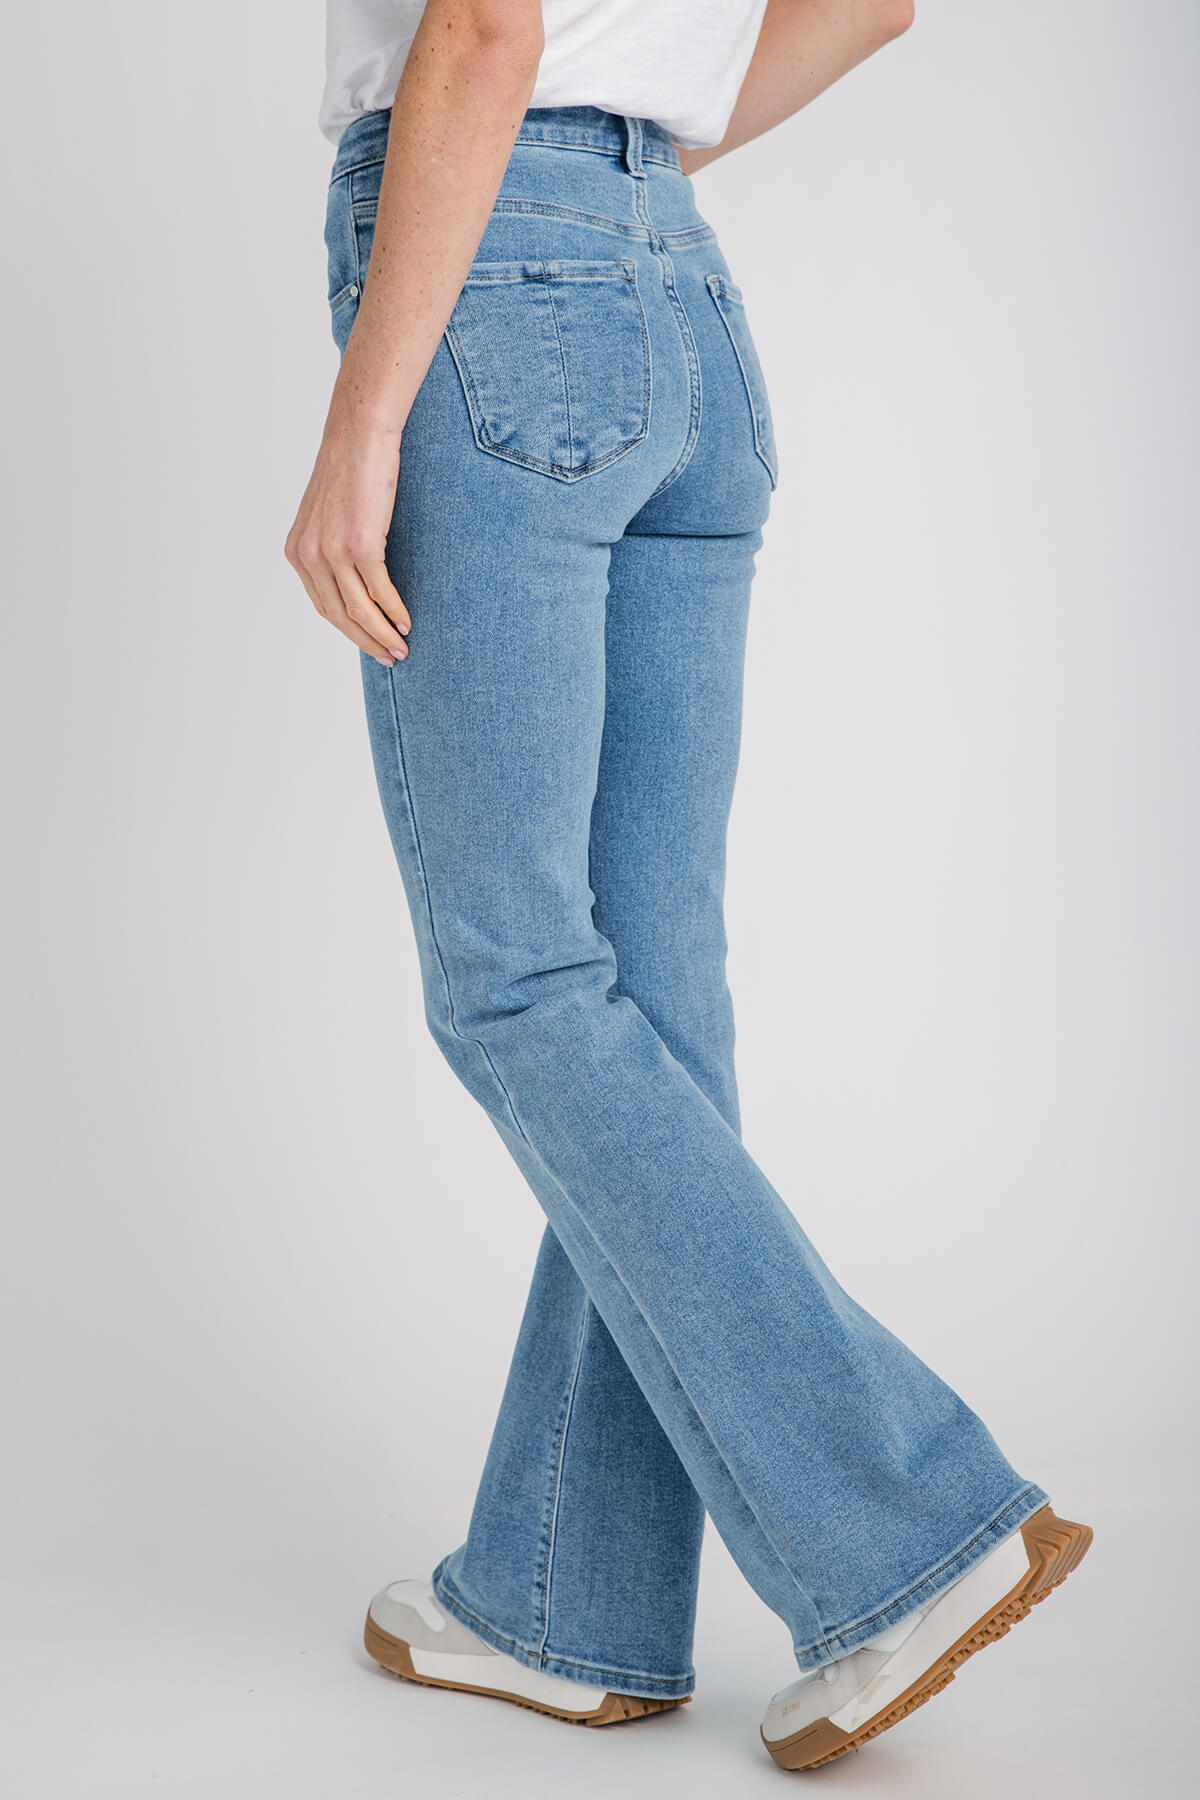 Risen Olivia High Rise Flare Jeans